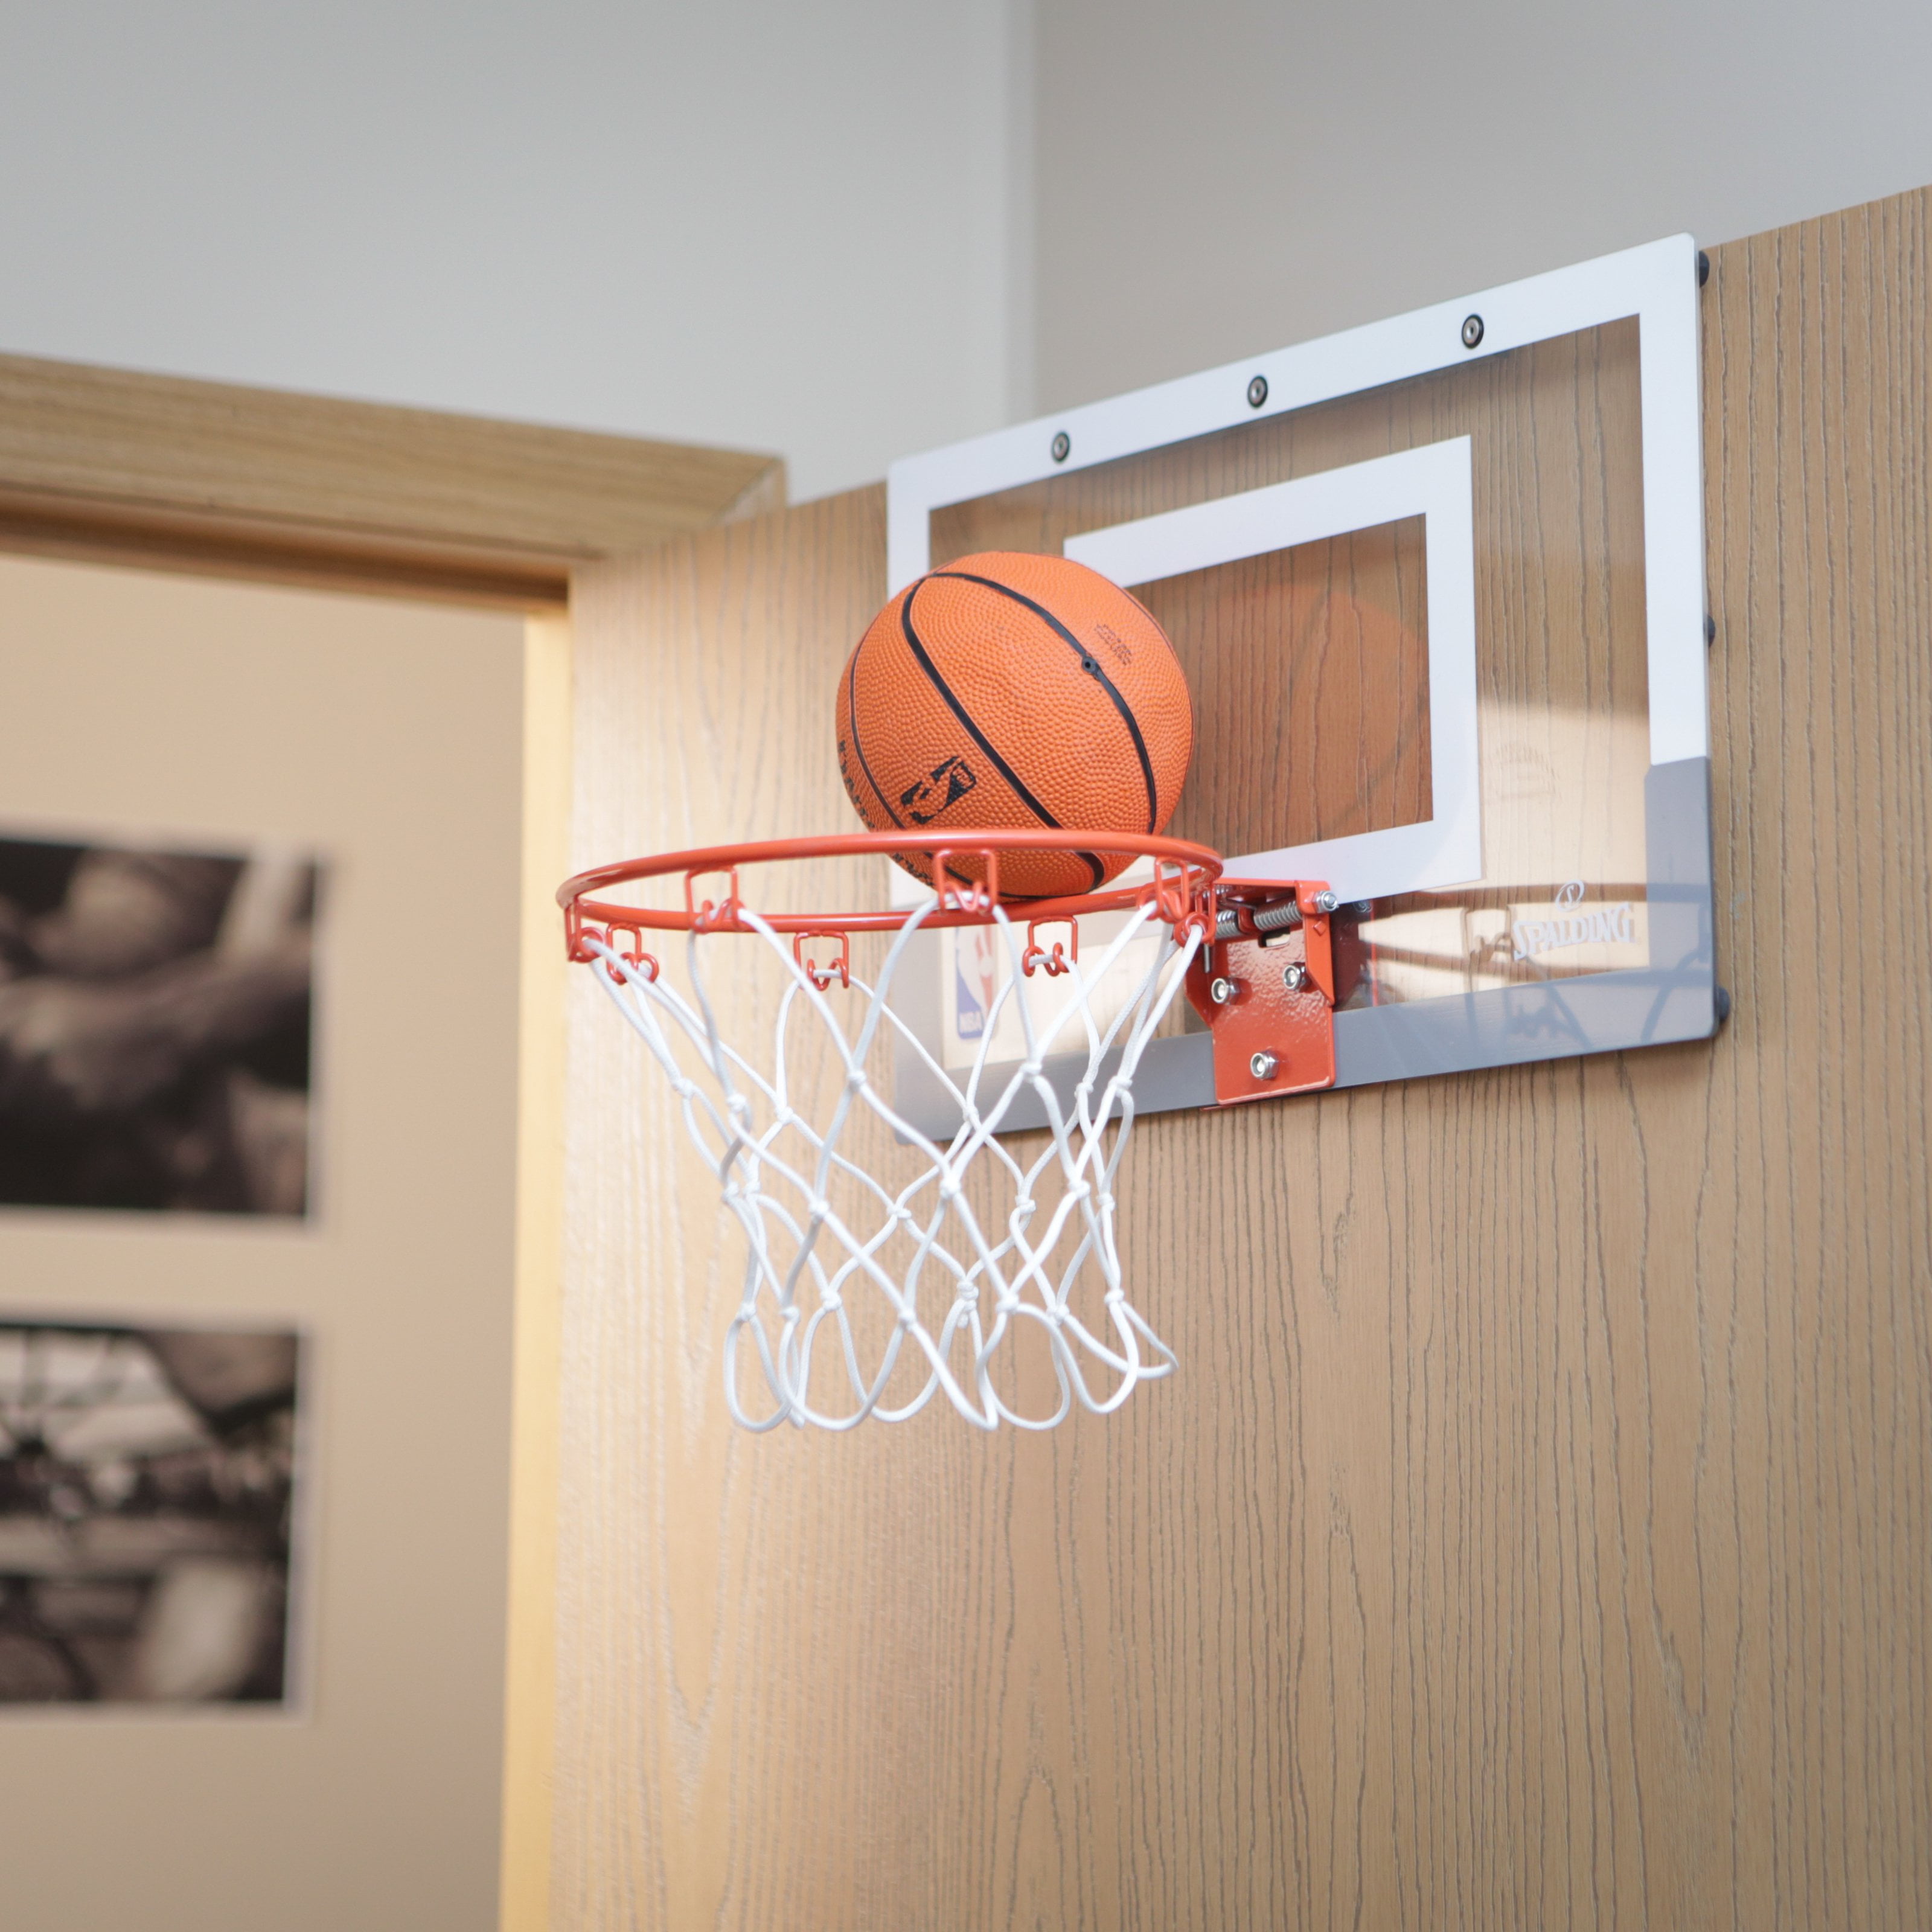 Nba Los Angeles Clippers Over The Door Mini Basketball Hoop : Target